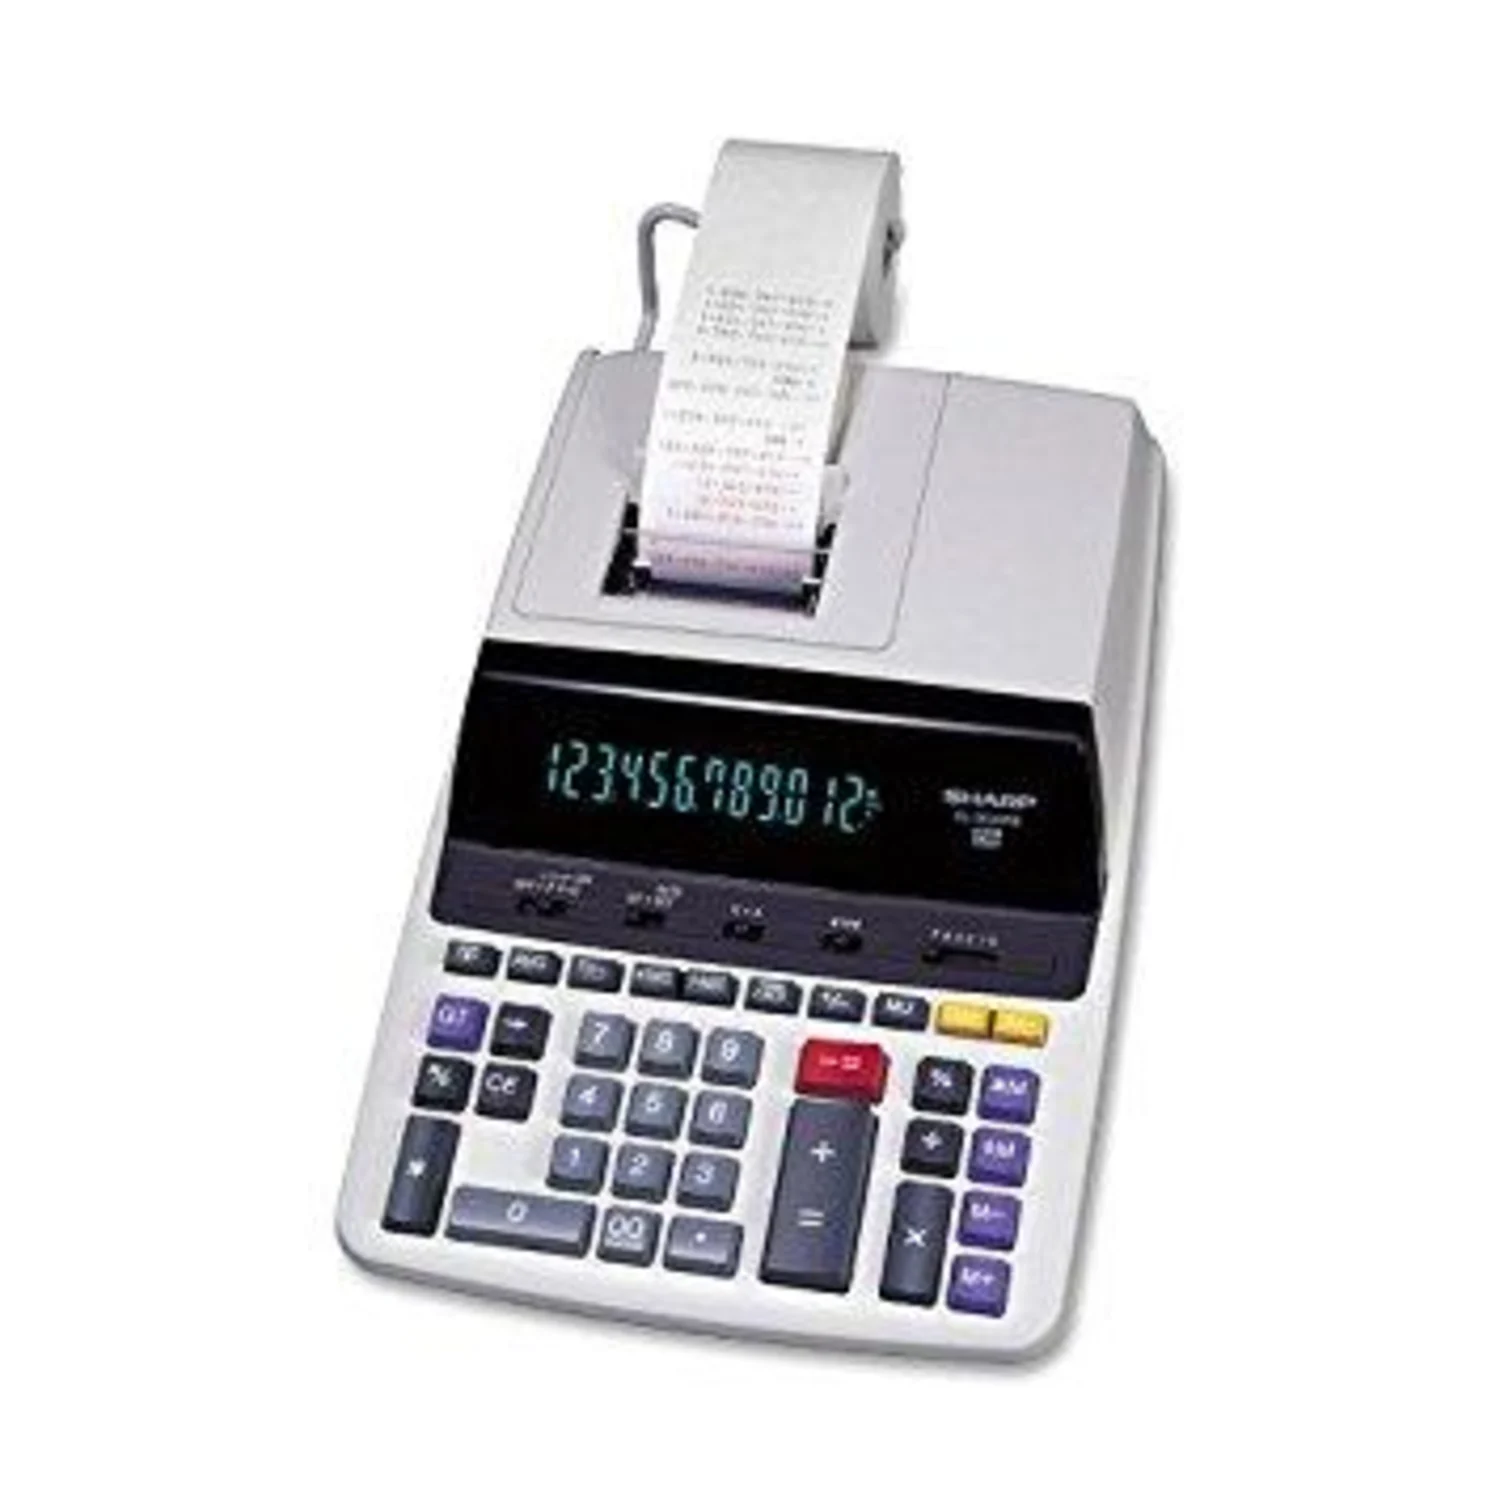 Calculadora Sharp EL-2630PIII 110V - Branco